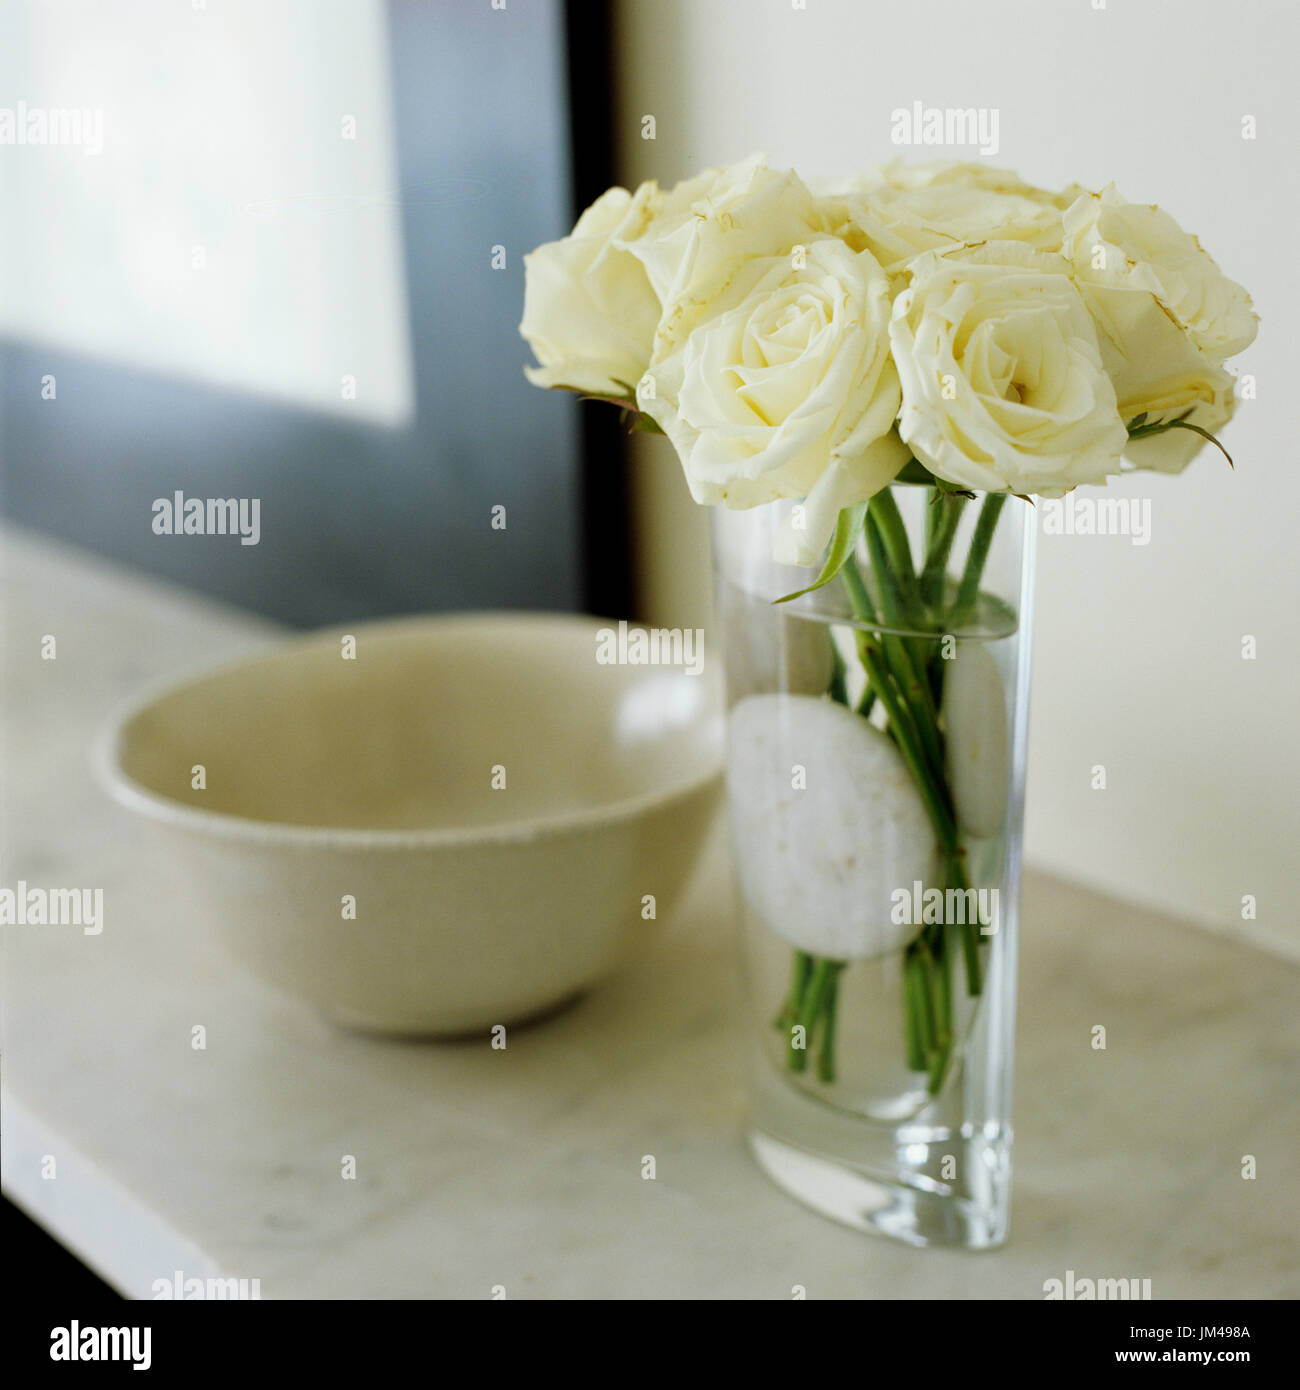 Flores blancas en florero fotografías e imágenes de alta resolución - Alamy